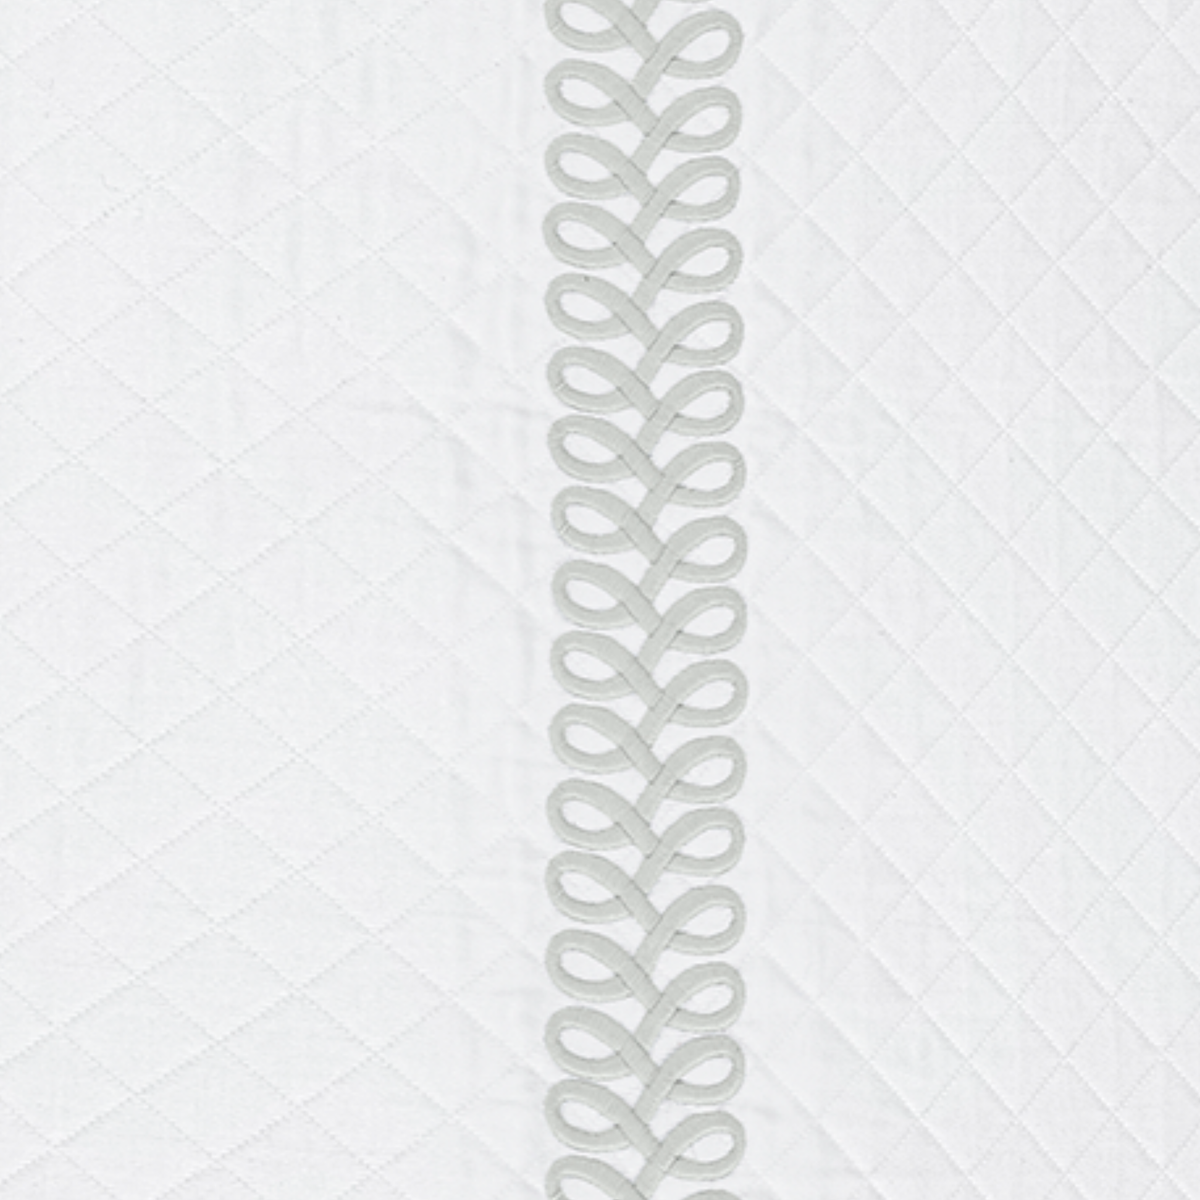 Swatch Sample of Matouk Schumacher Astor Braid Matelassé Bedding in Silver Color